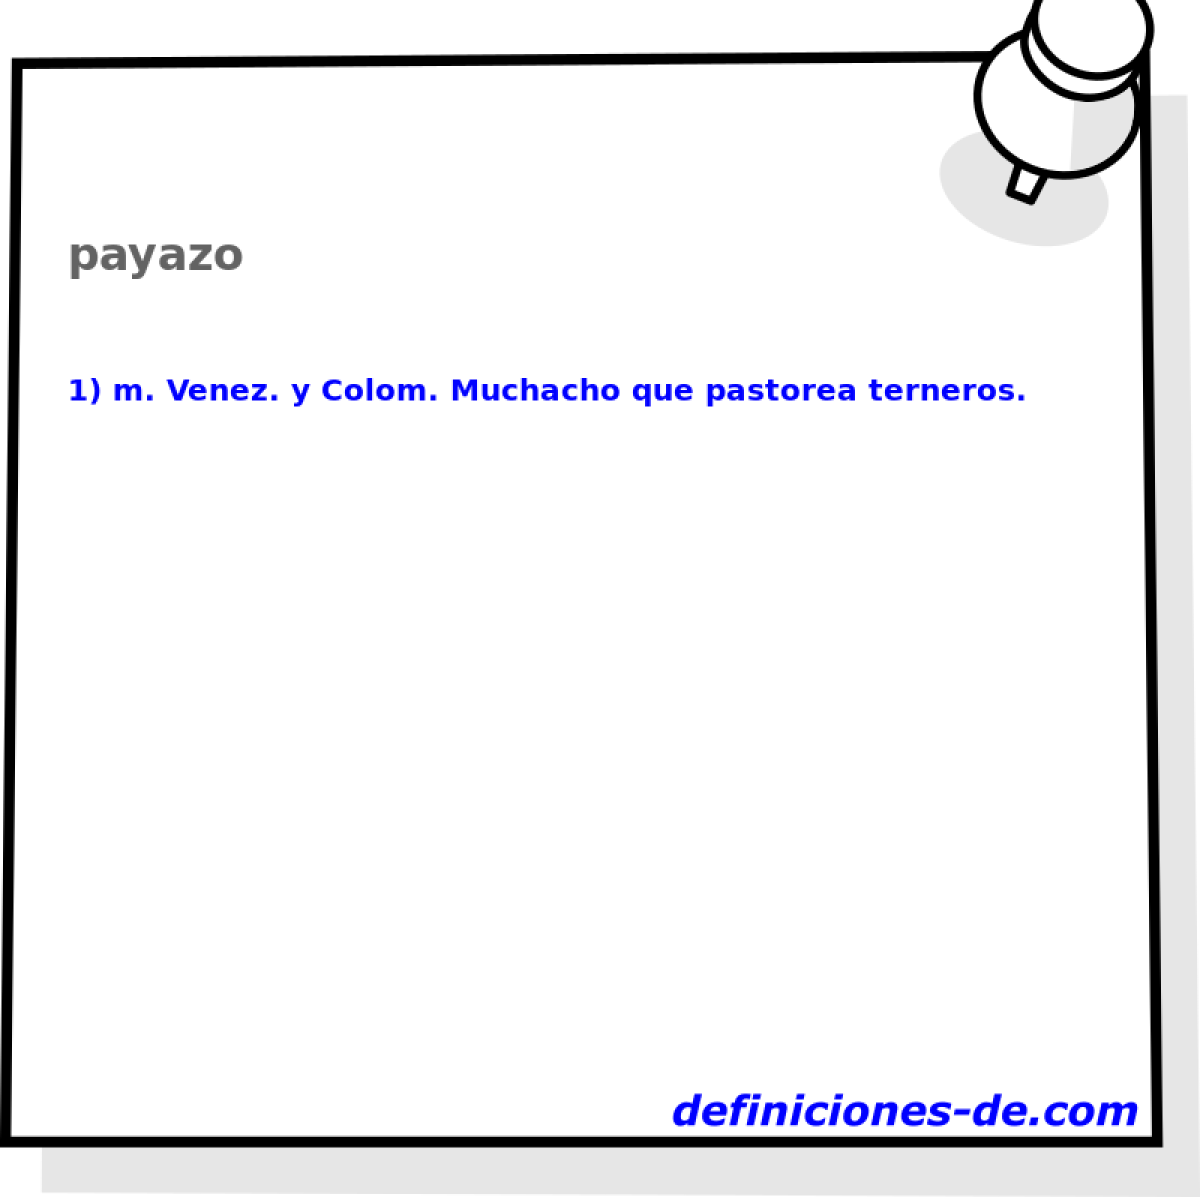 payazo 